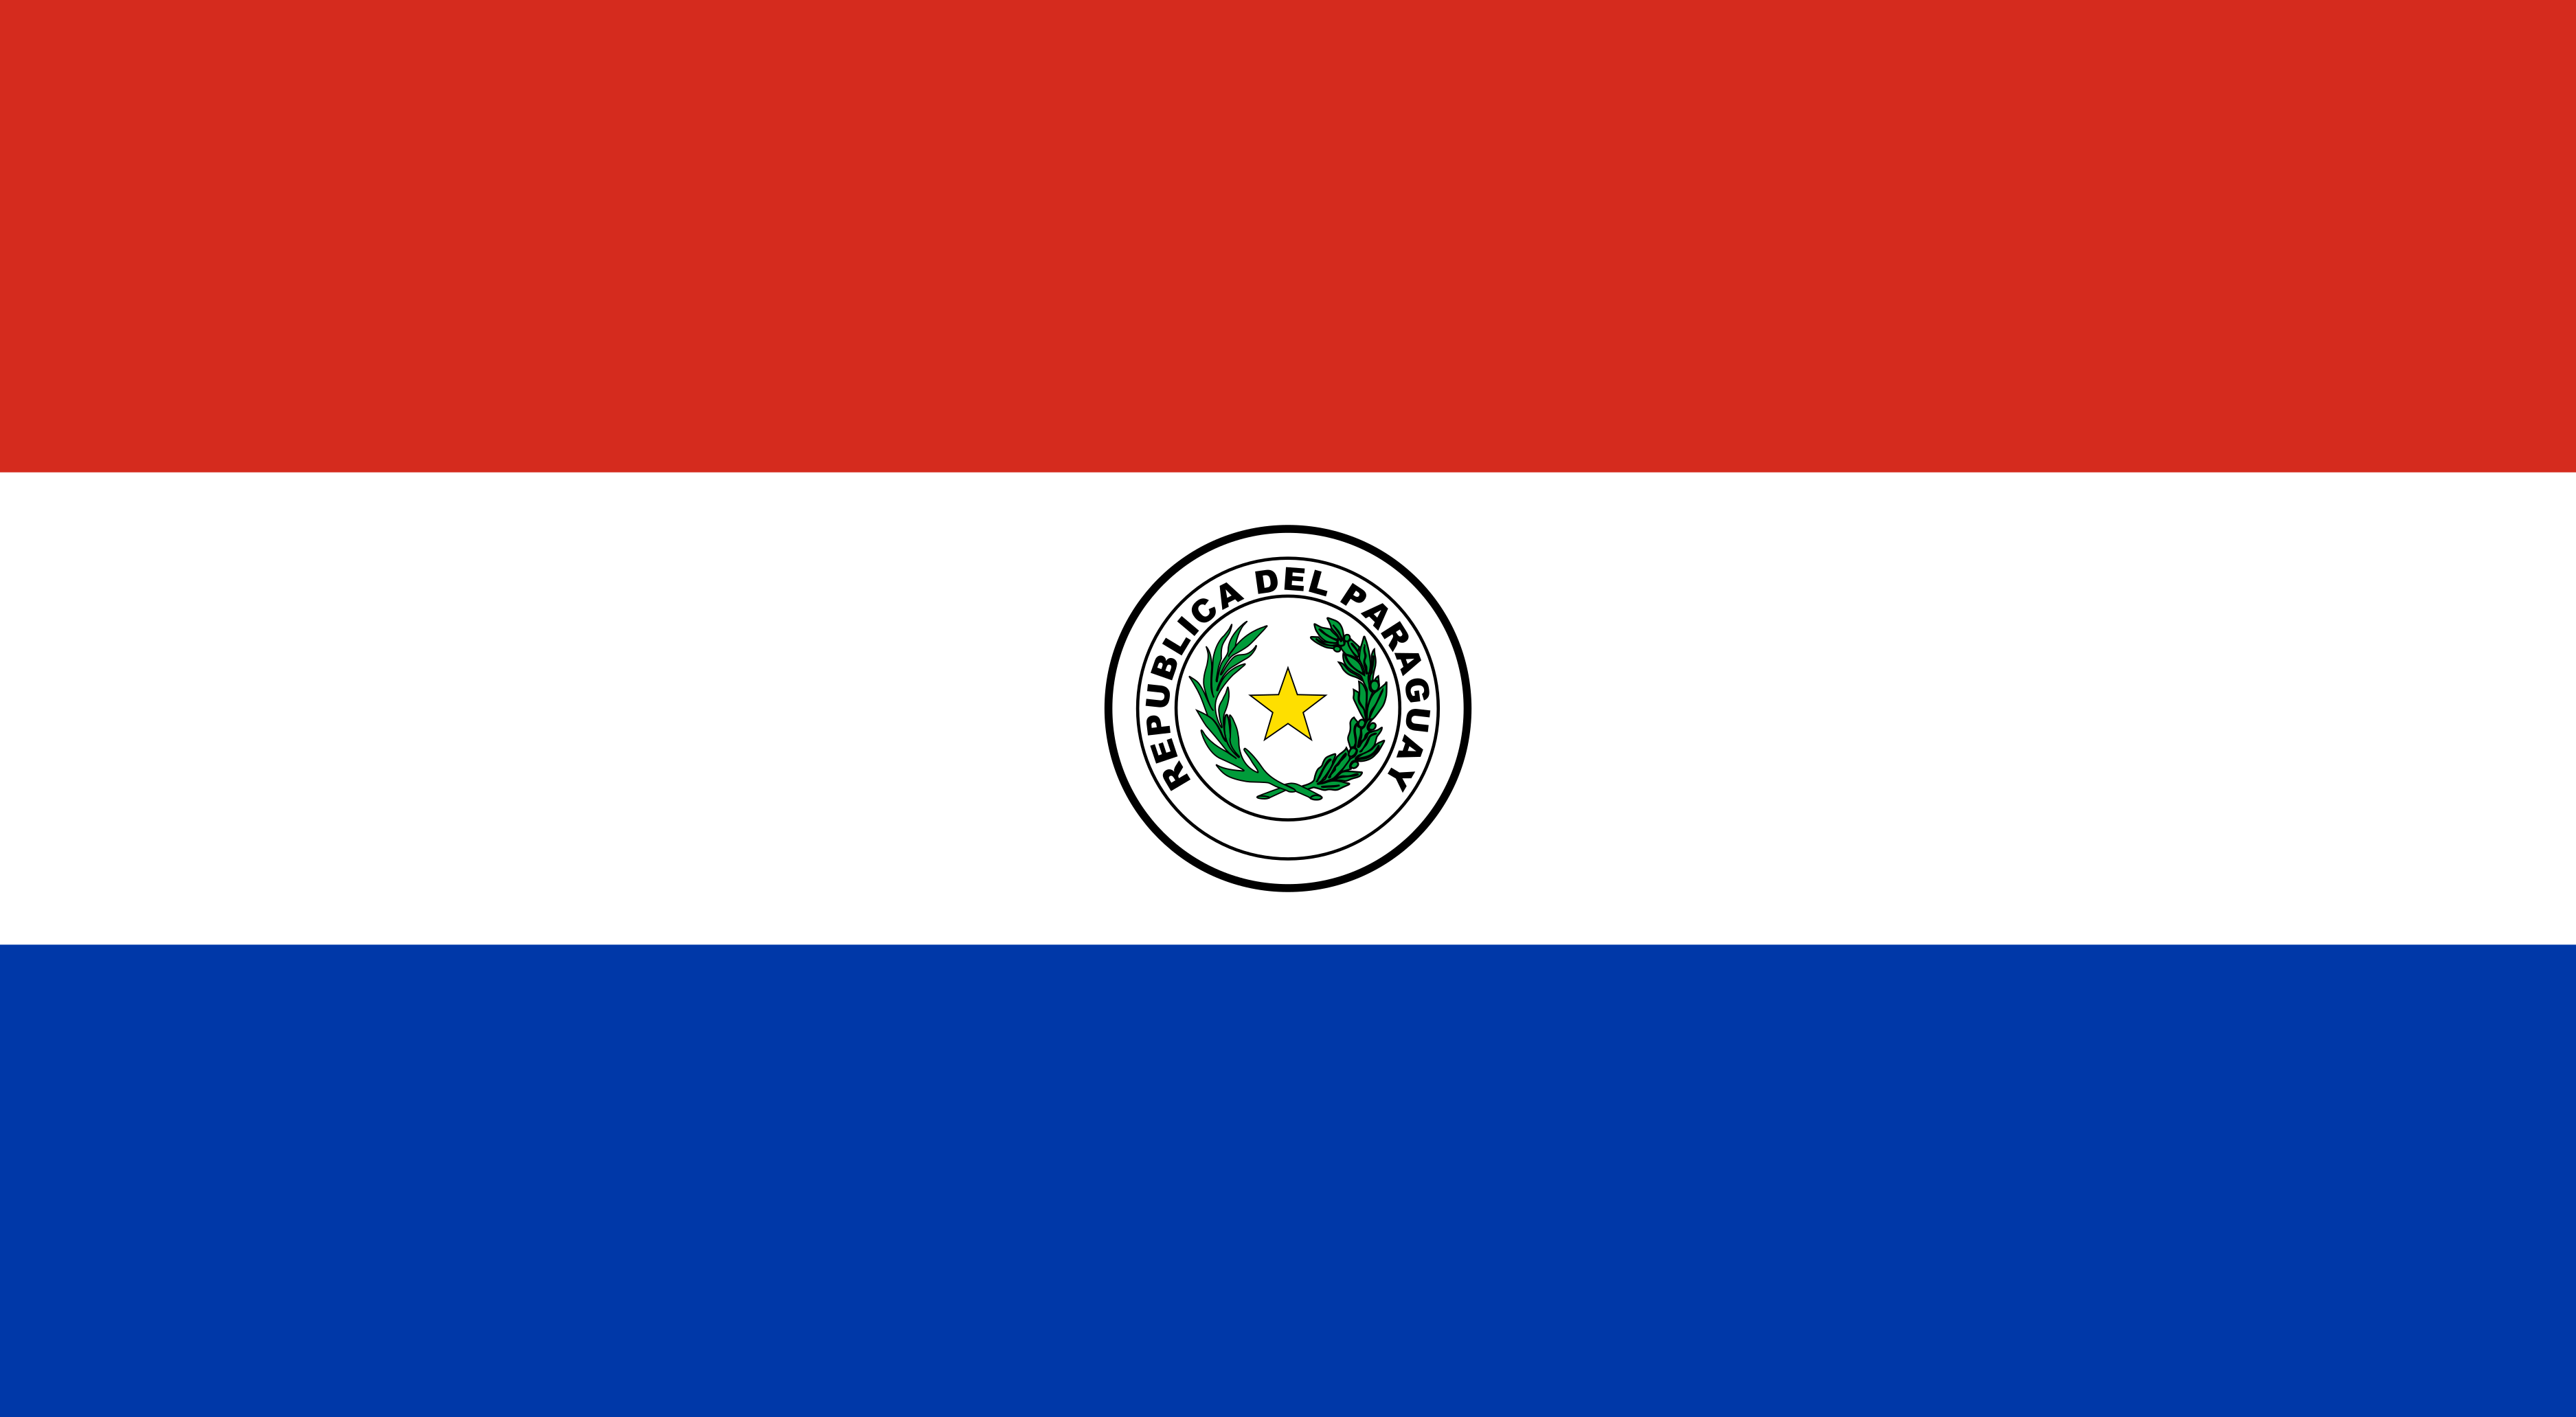 Paraguay Flag Image - Free Download